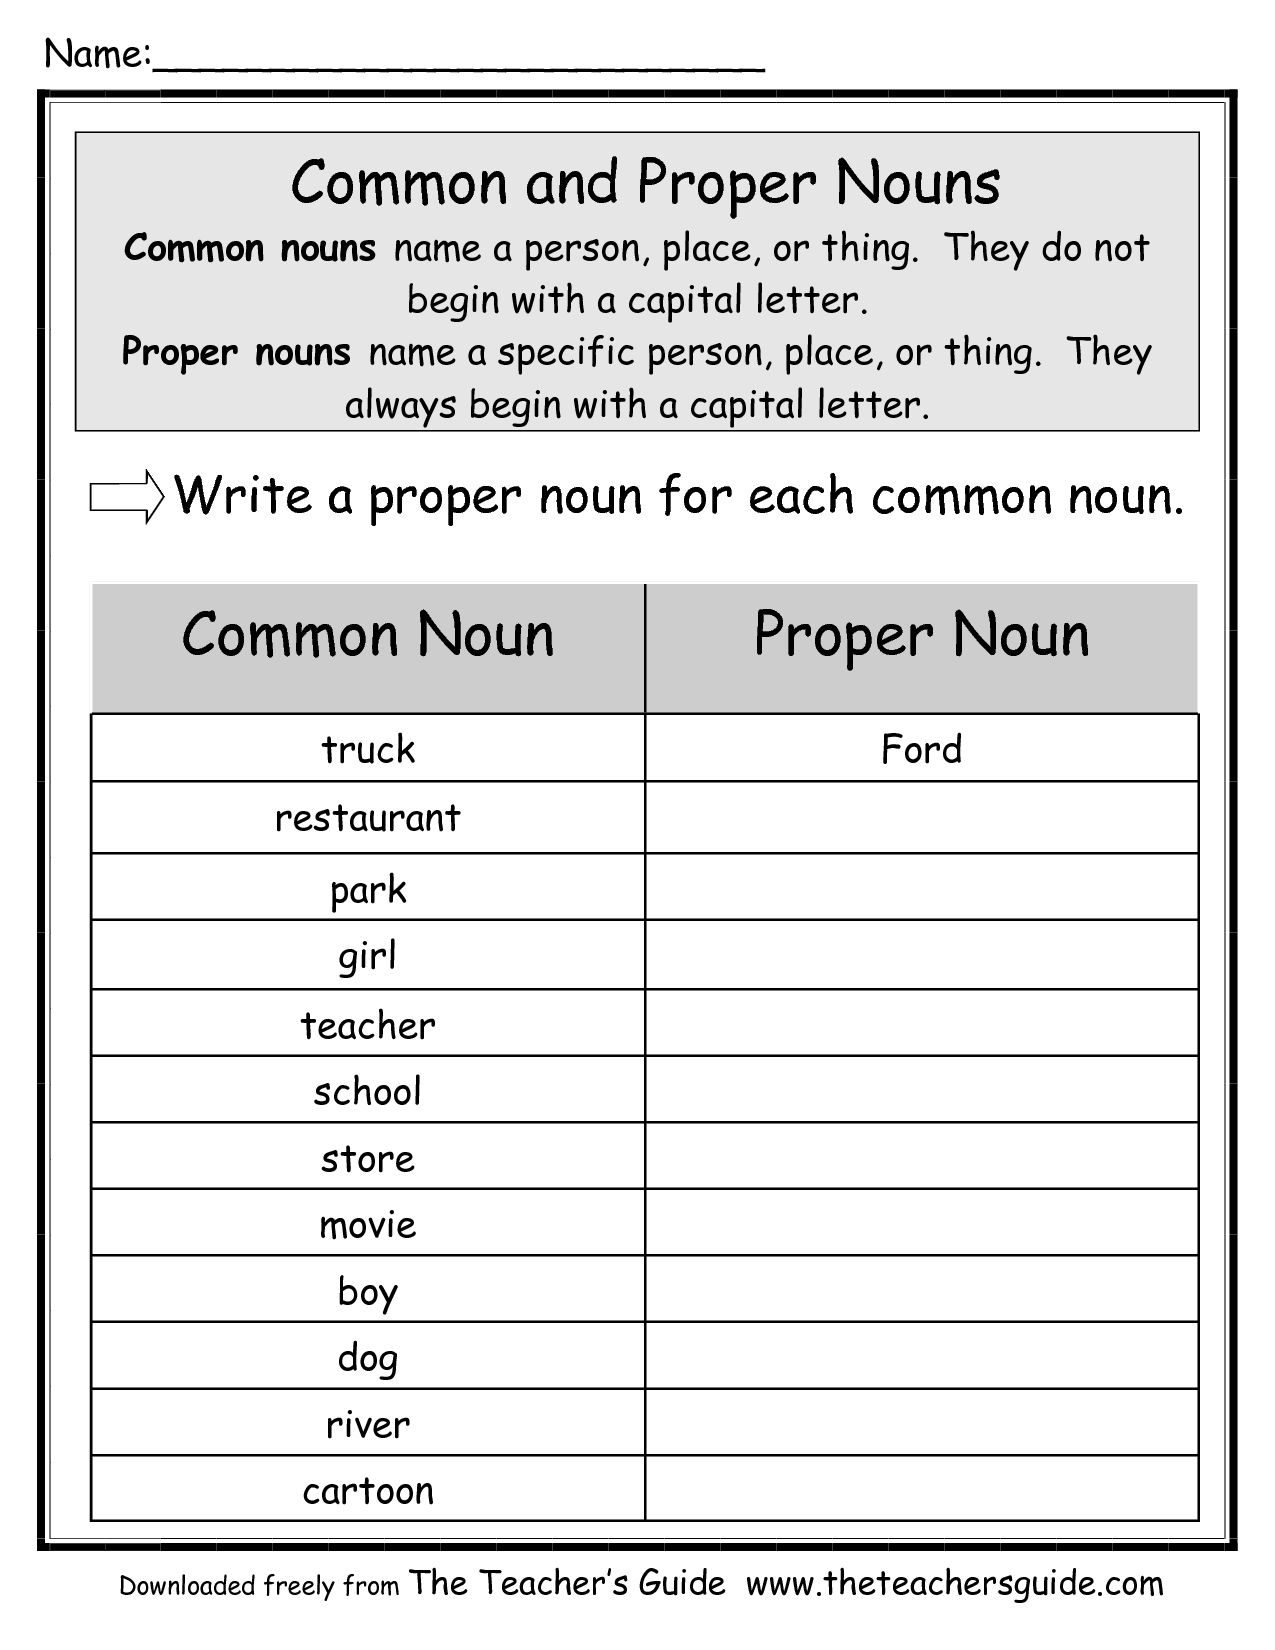 15 Best Images of Proper Pronouns Worksheets - 2nd Grade Pronoun ...